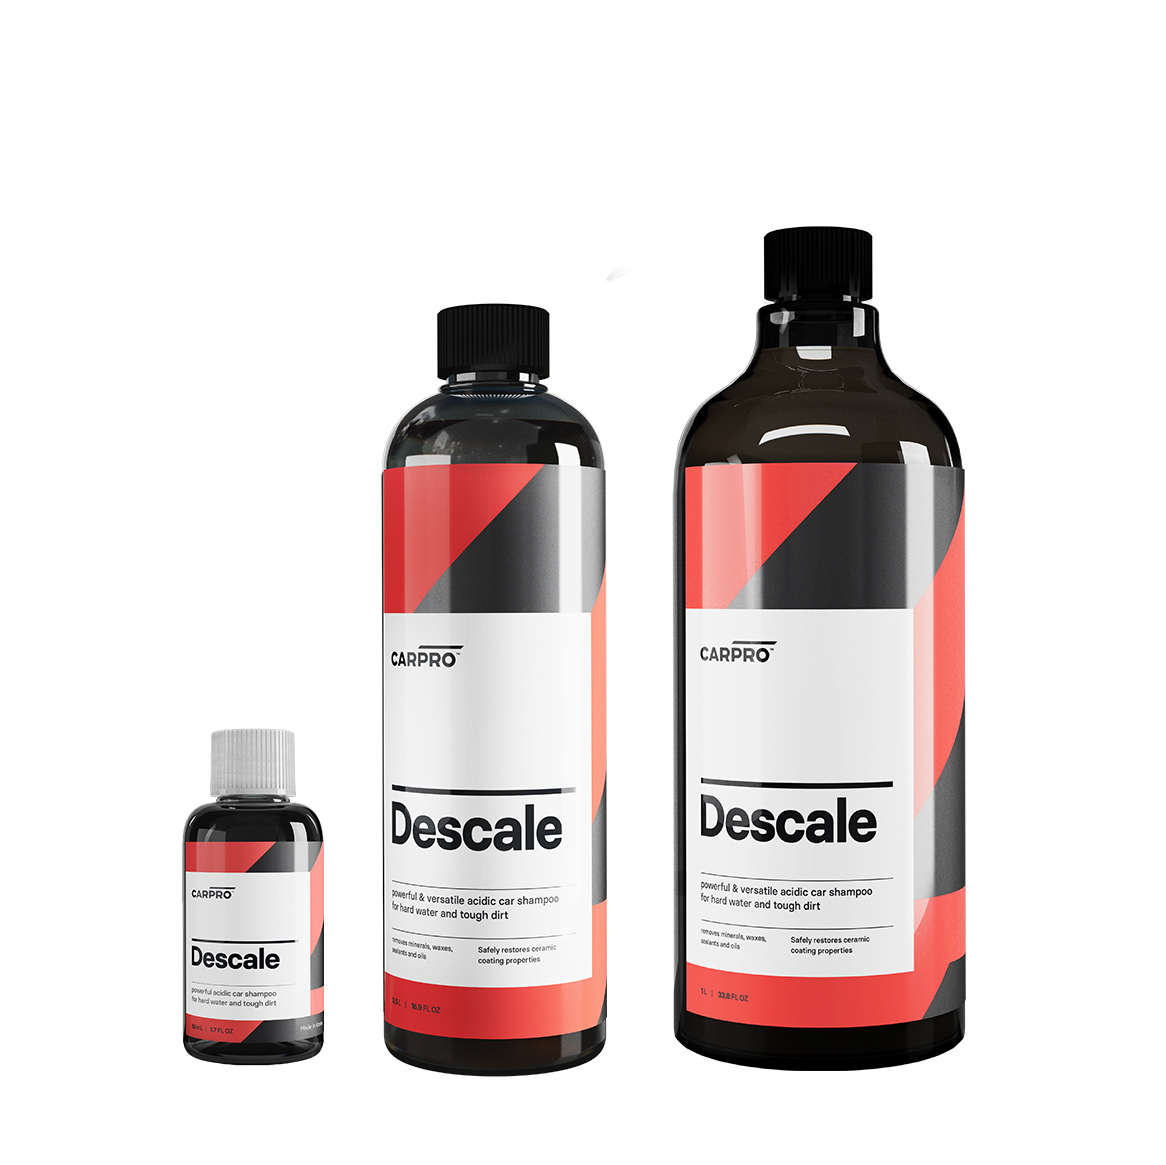 CARPRO - DESCALE - Reactivating Shampoo For Coatings - Crijns Carproducts